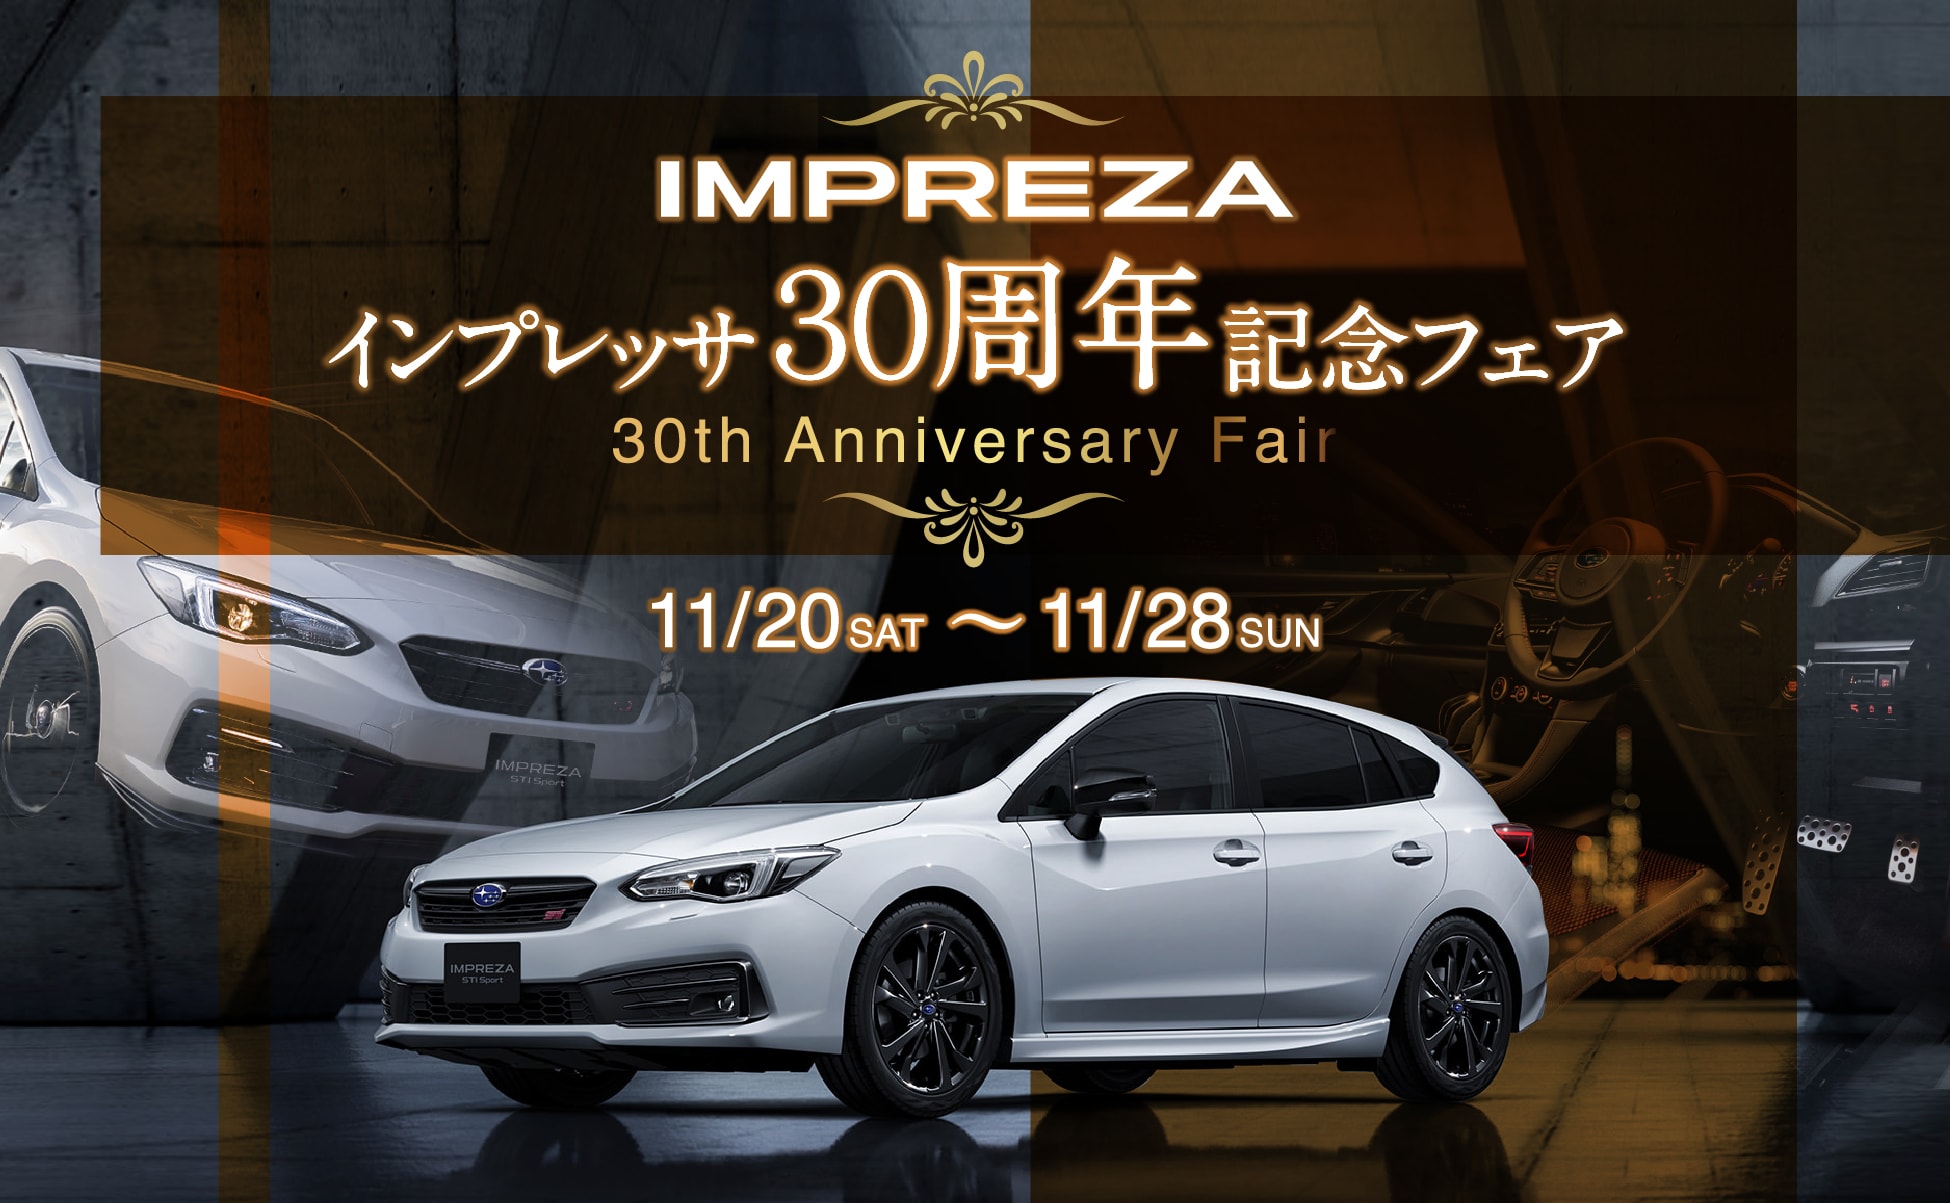 IMPREZA 30周年記念フェア 11/20 - 11/28